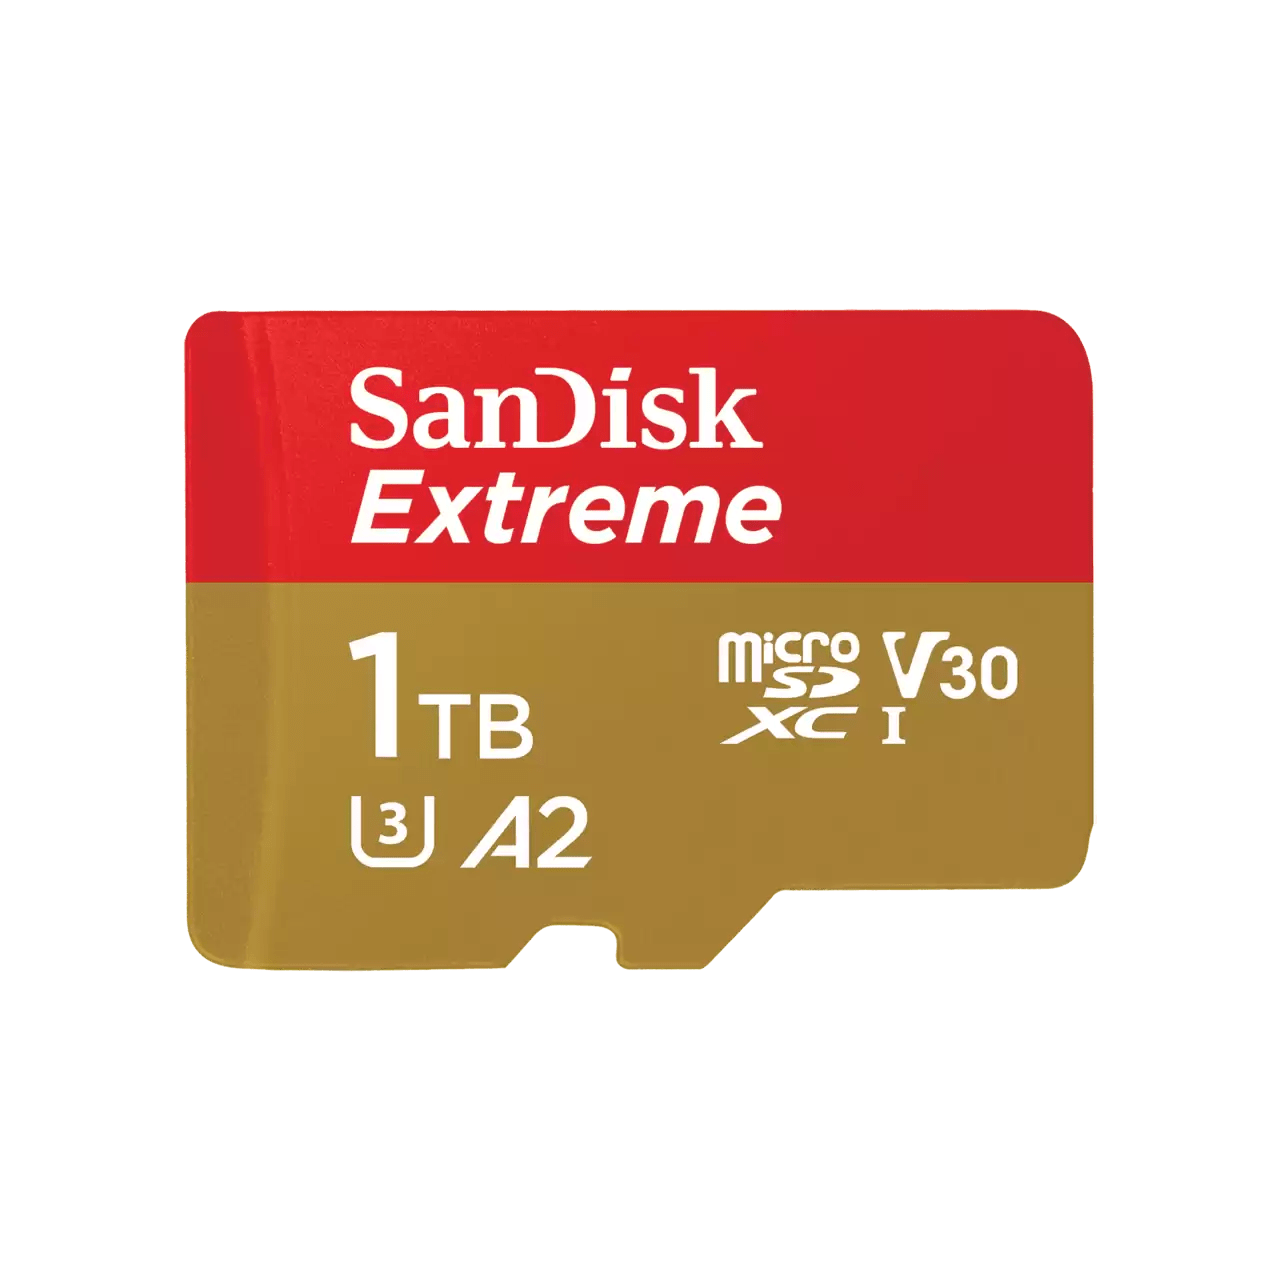 Sandisk Extreme 1TB A2 V30 U3 UHS - I microSDXC 記憶卡 (SDSQXAV - 1T00 - GN6MN) - Fever Electrics 電器熱網購平台